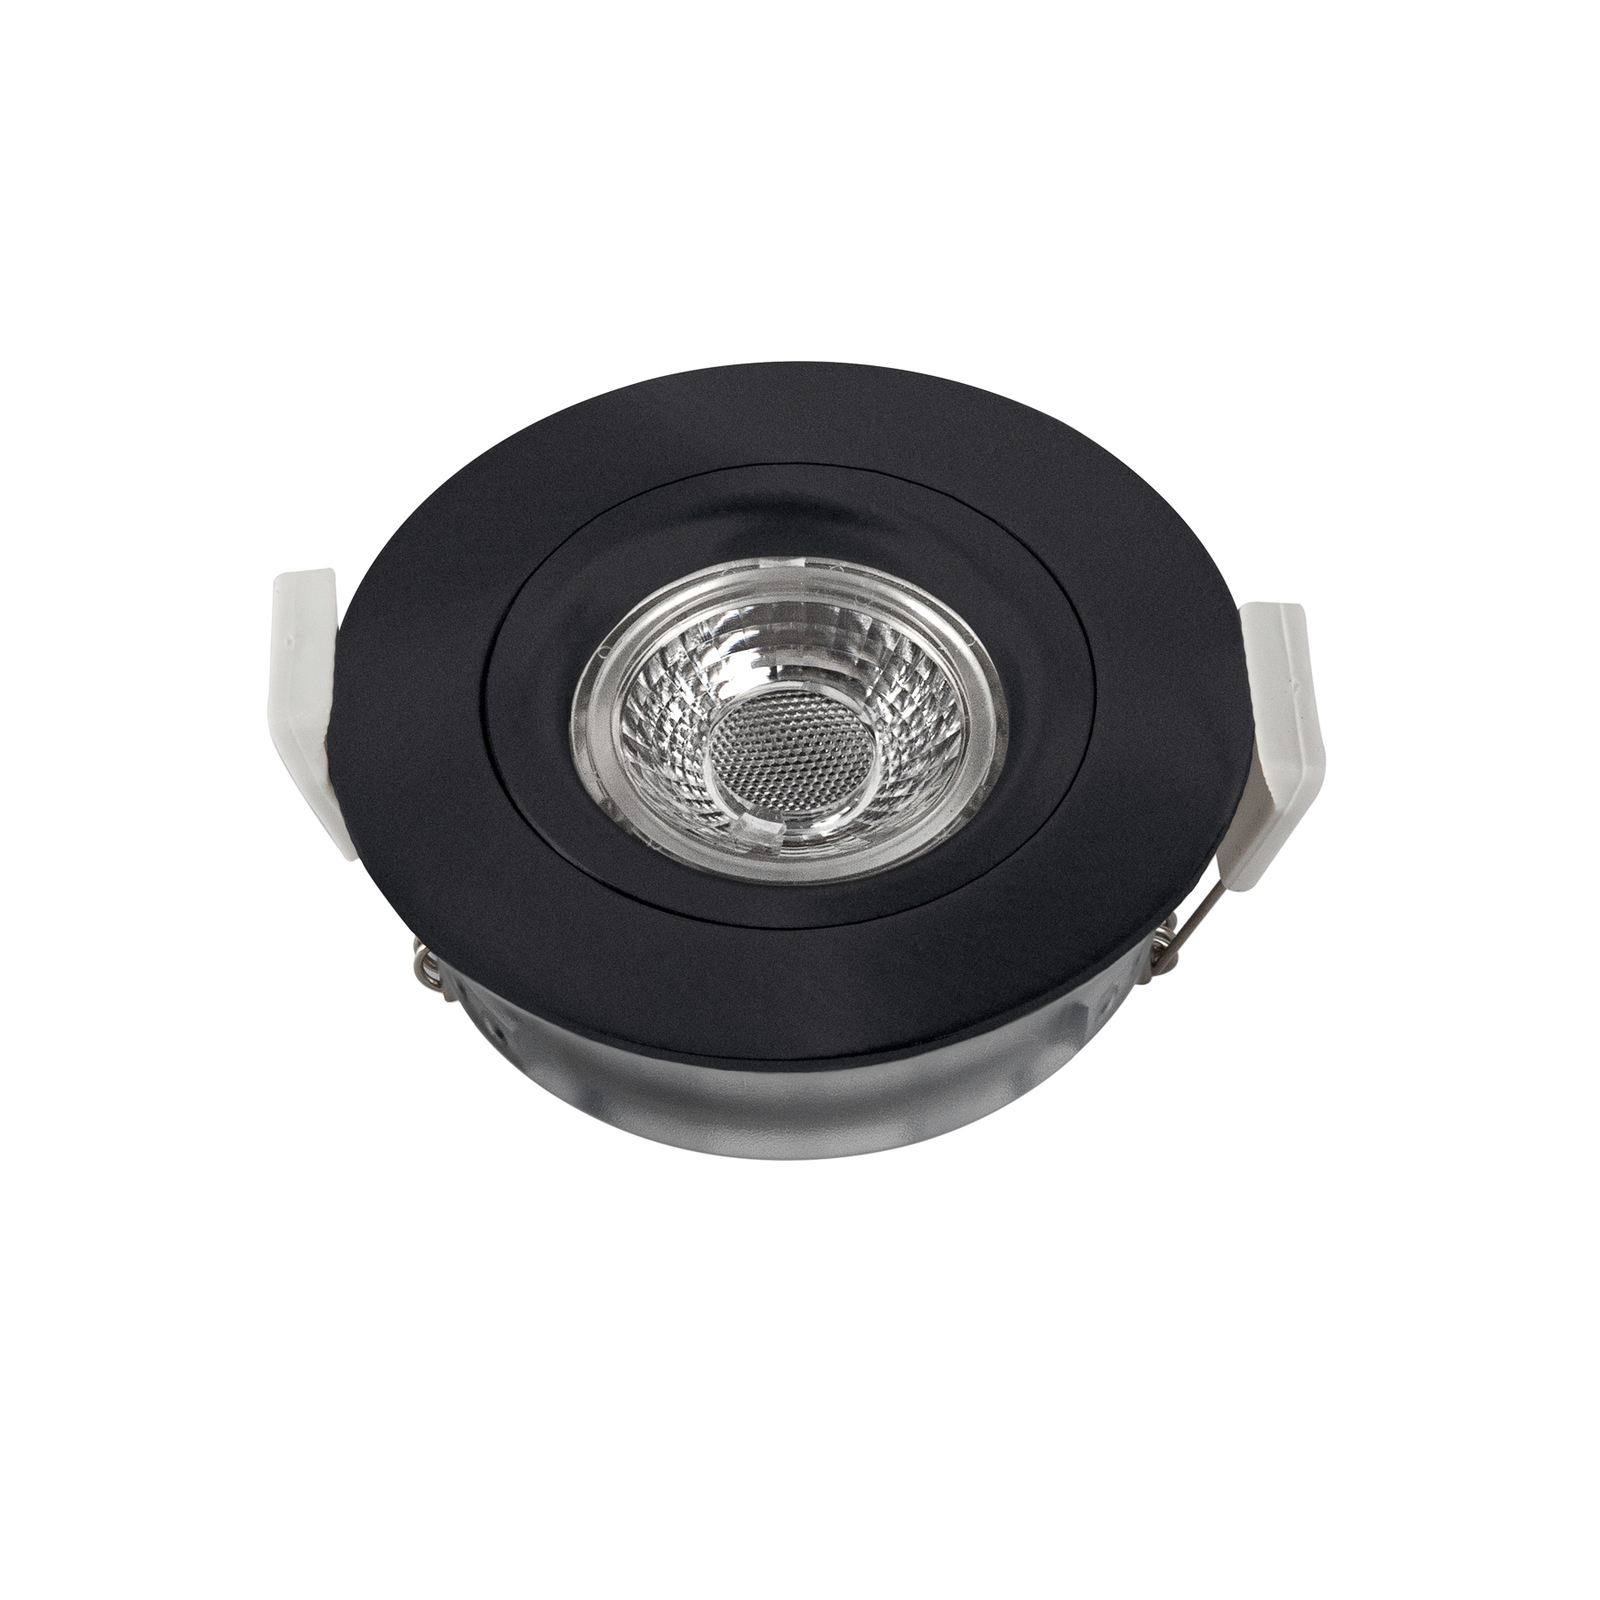 DL6809 LED downlight, round, black